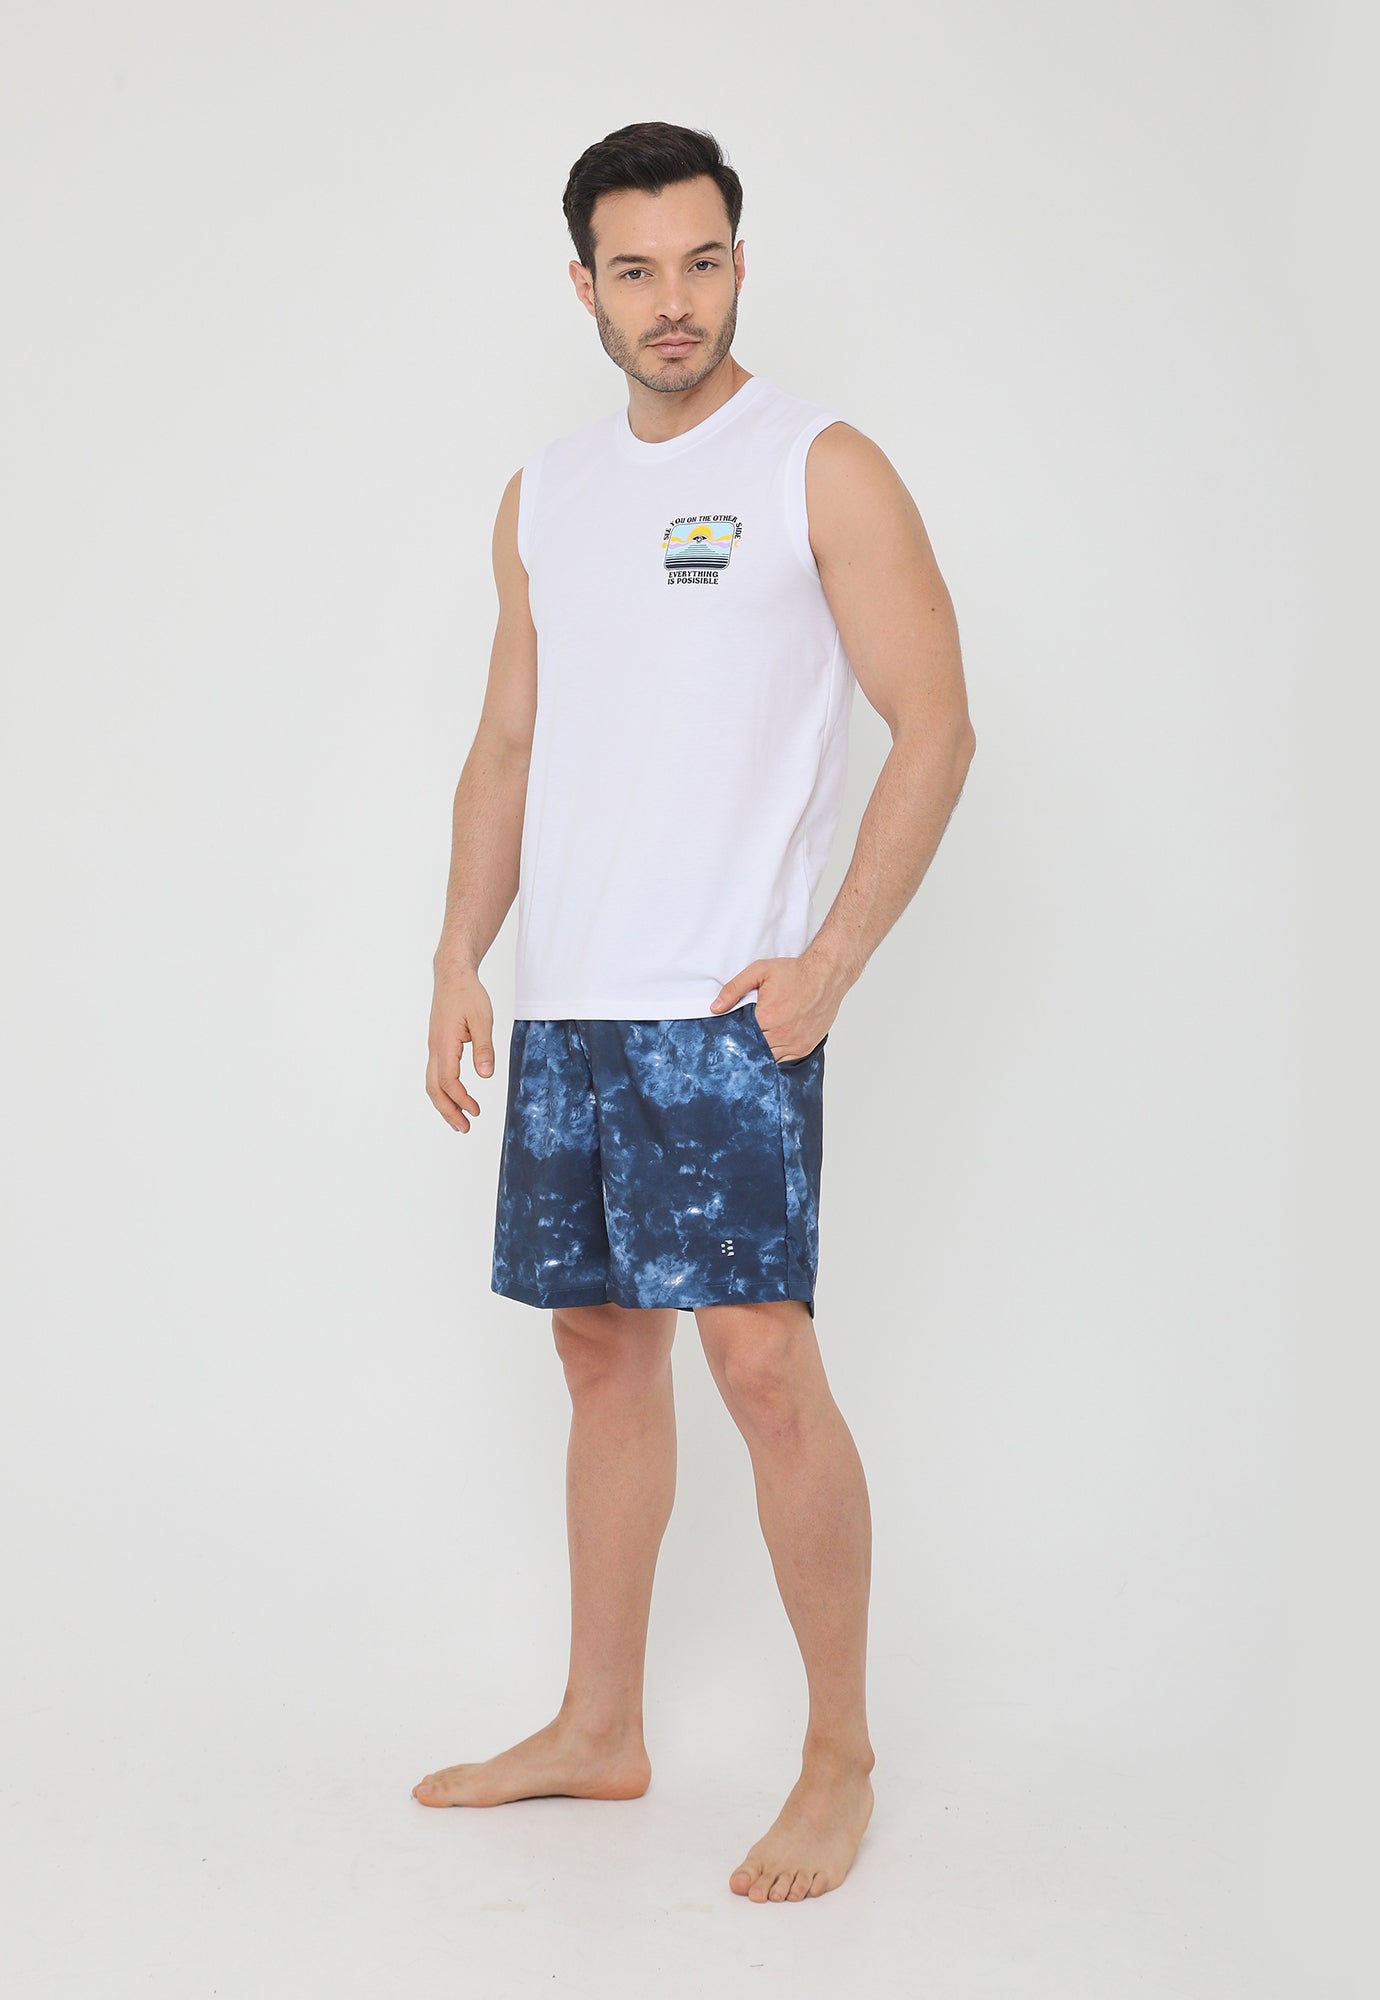 Pantaloneta de playa azul oscuro sublimada, bolsillos laterales y pretina ajustada para hombre